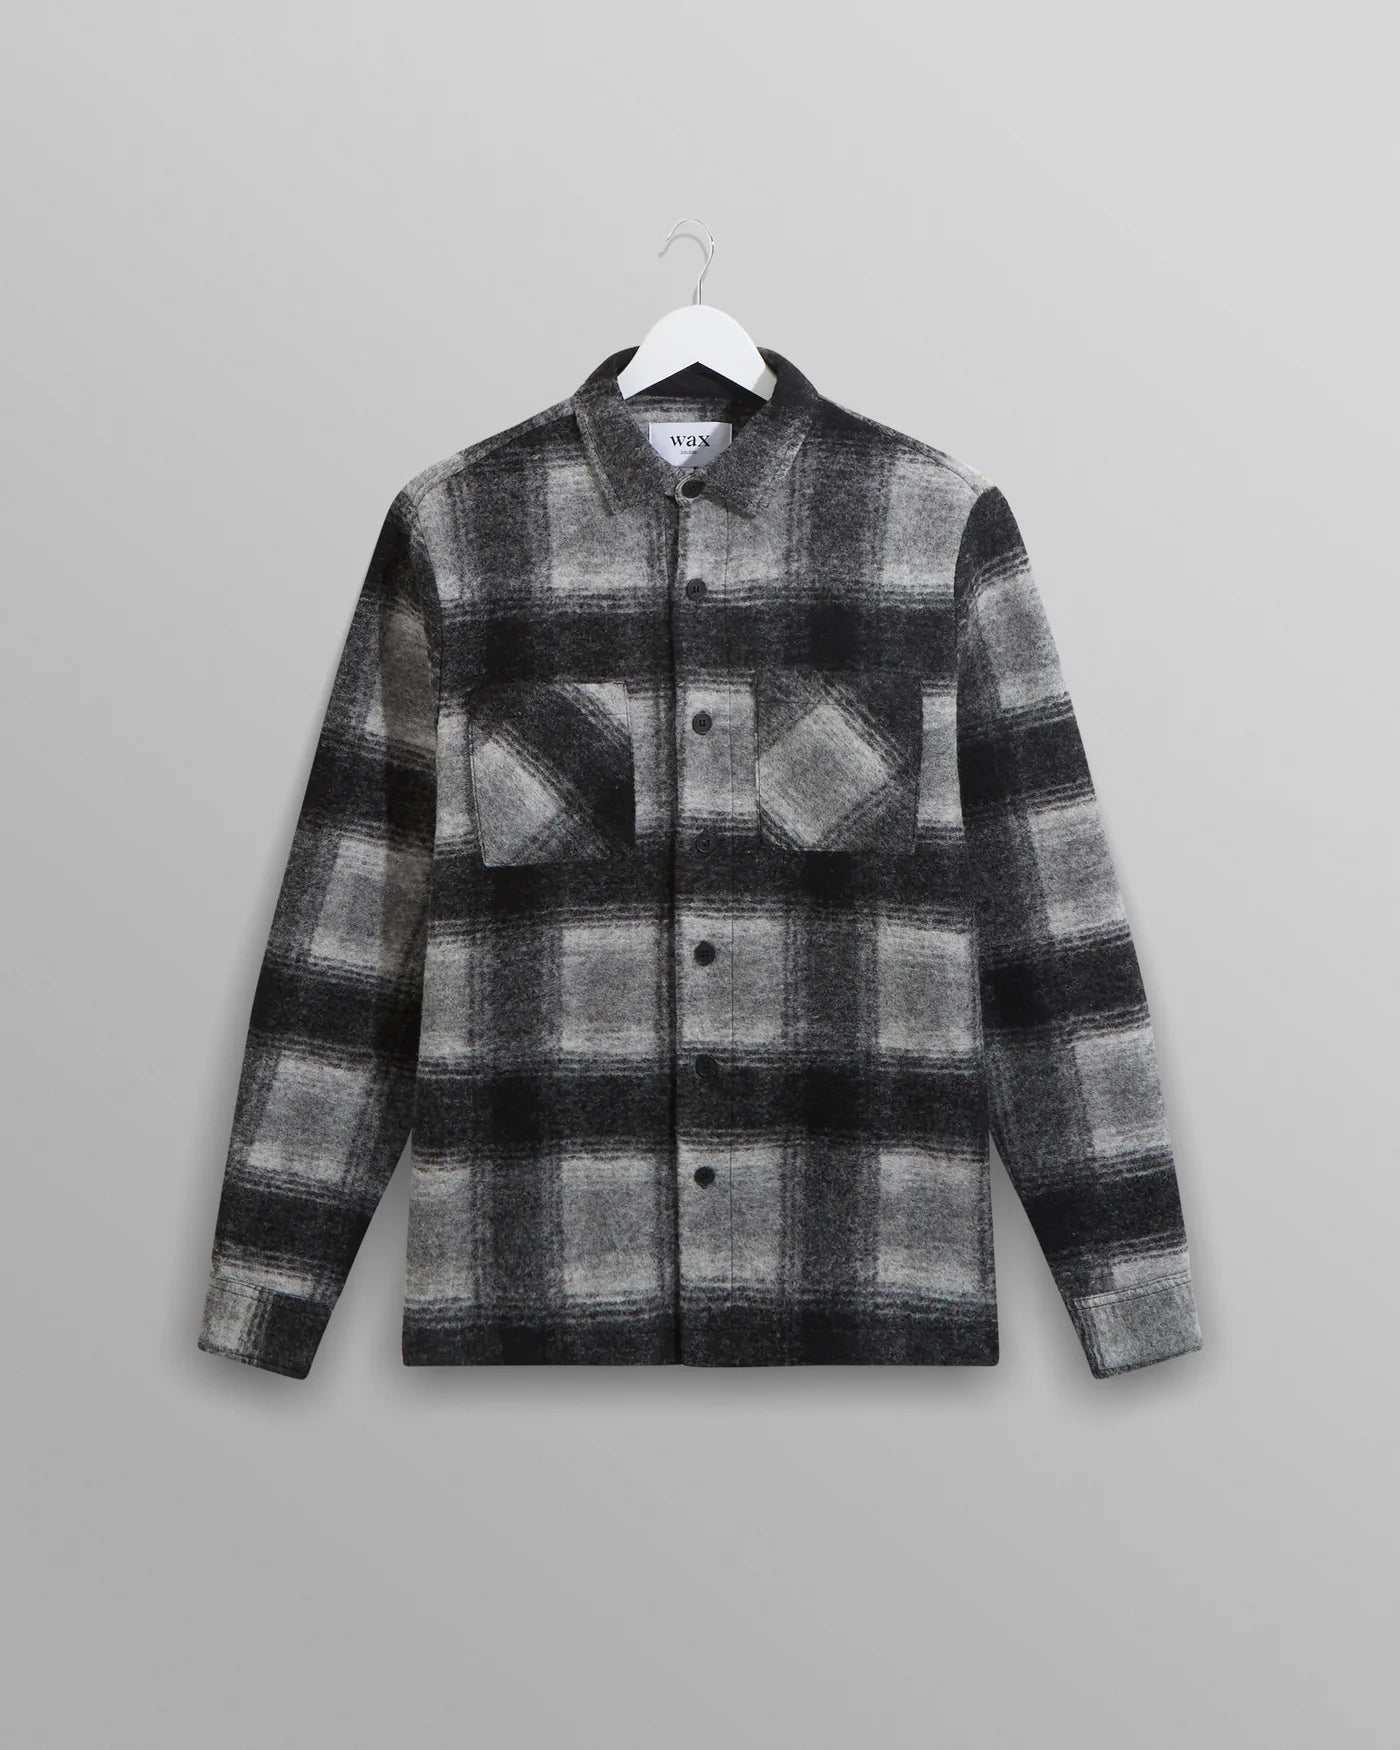 WAX LONDON CLOTHING Whiting Overshirt - Charcoal Pine